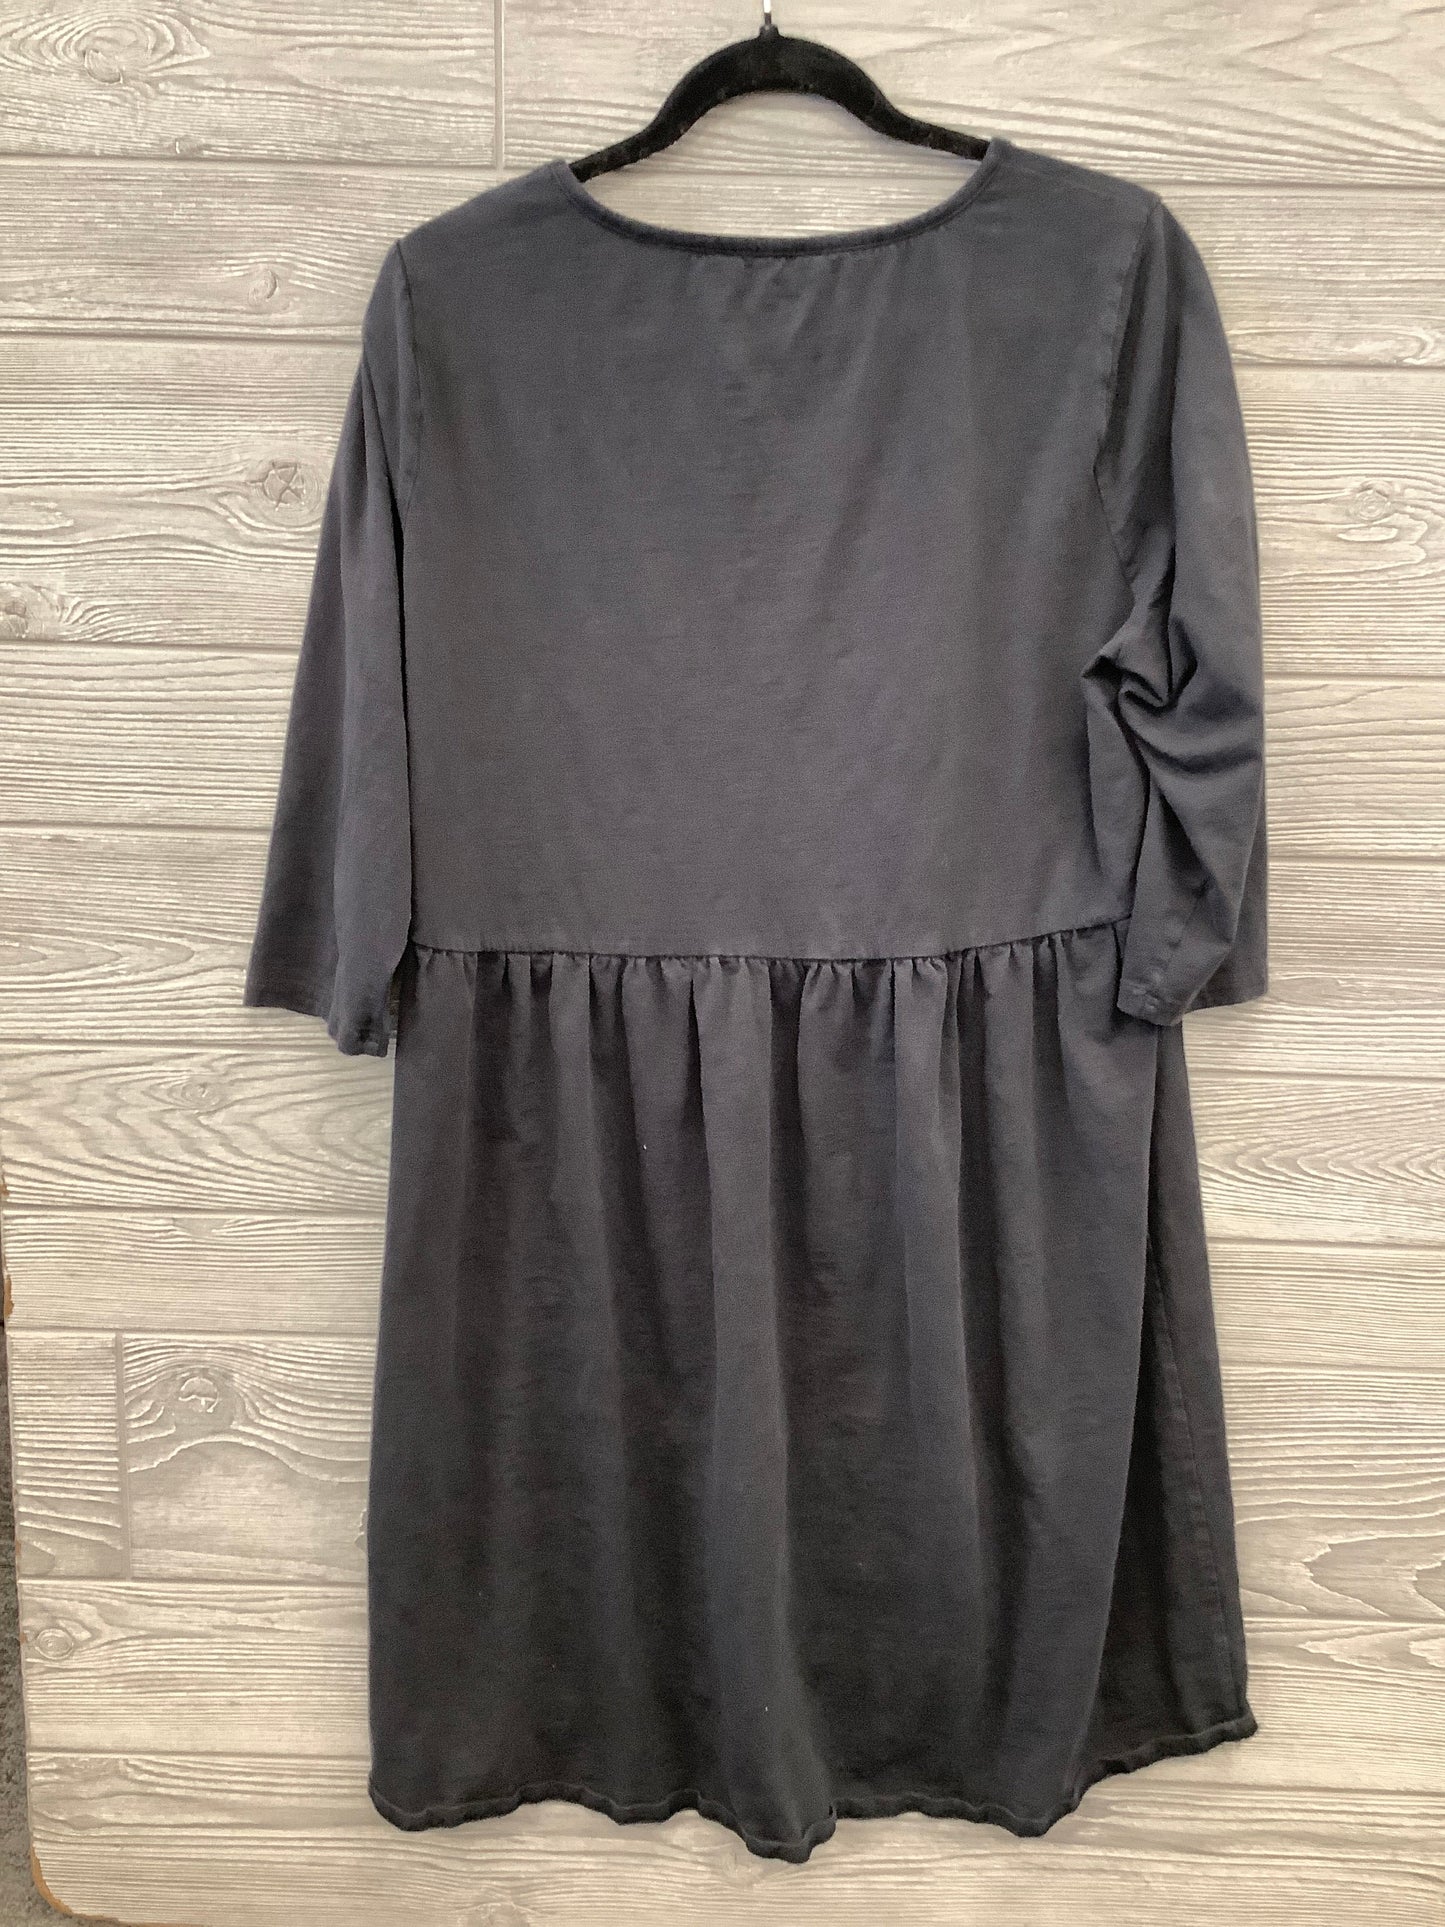 Dress Casual Midi By Matilda Jane  Size: Xl